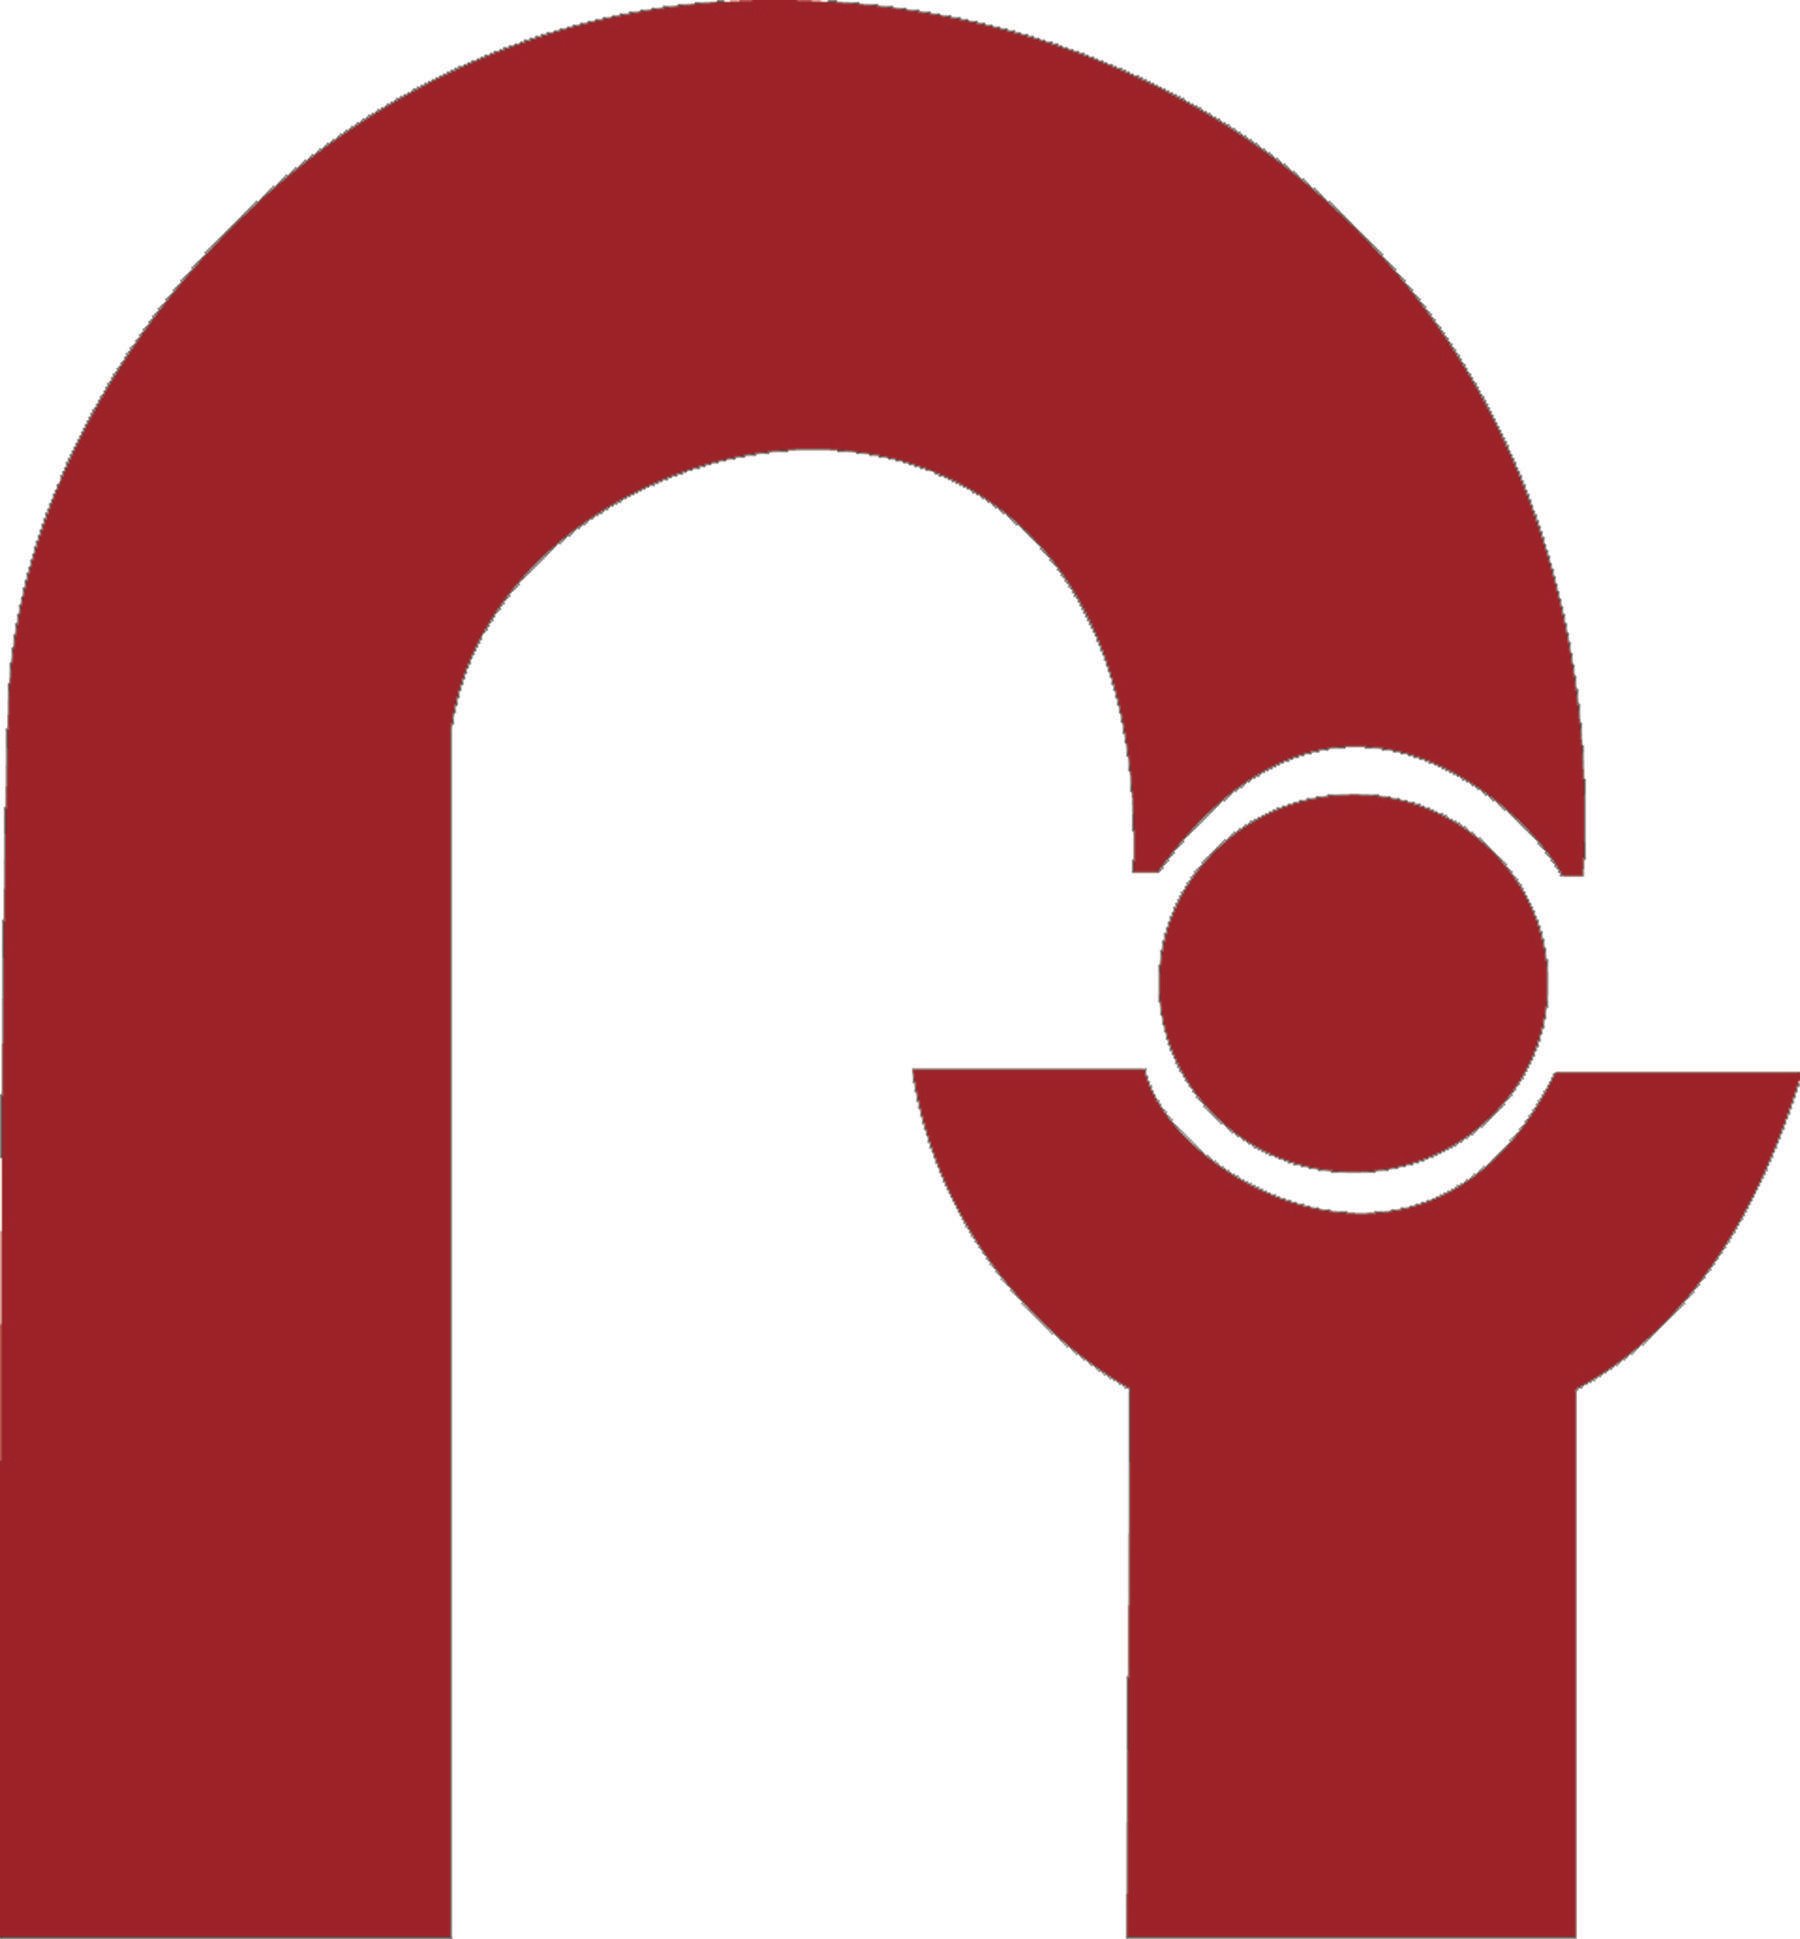 That Has a Red O Logo - RI Logos Robotics Institute Carnegie Mellon University